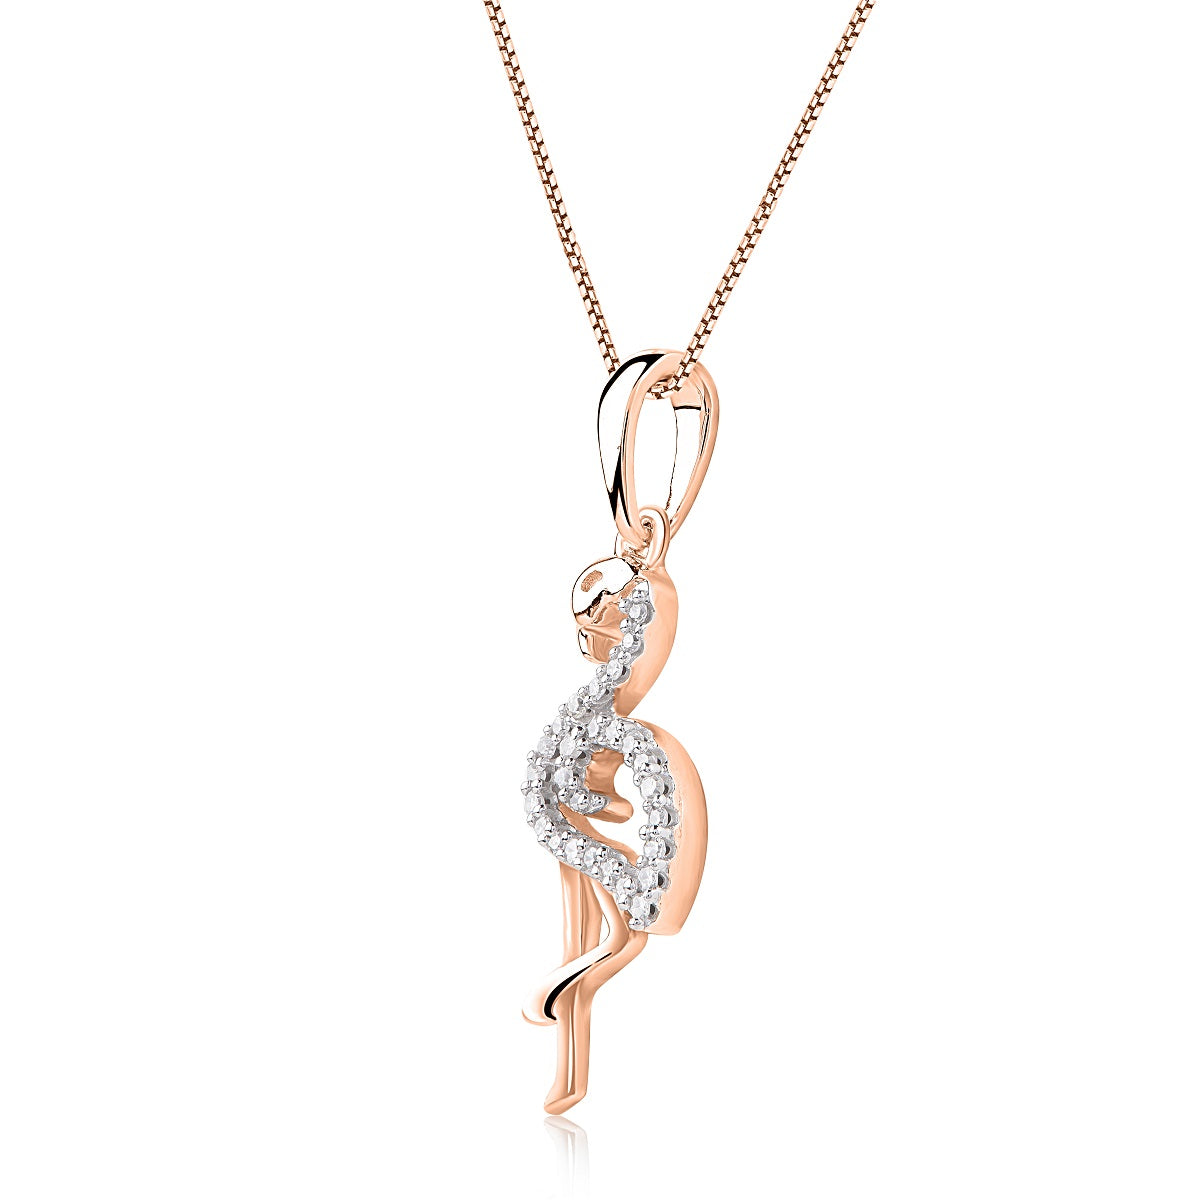 Flamingo Pendant Necklace in 10K Gold